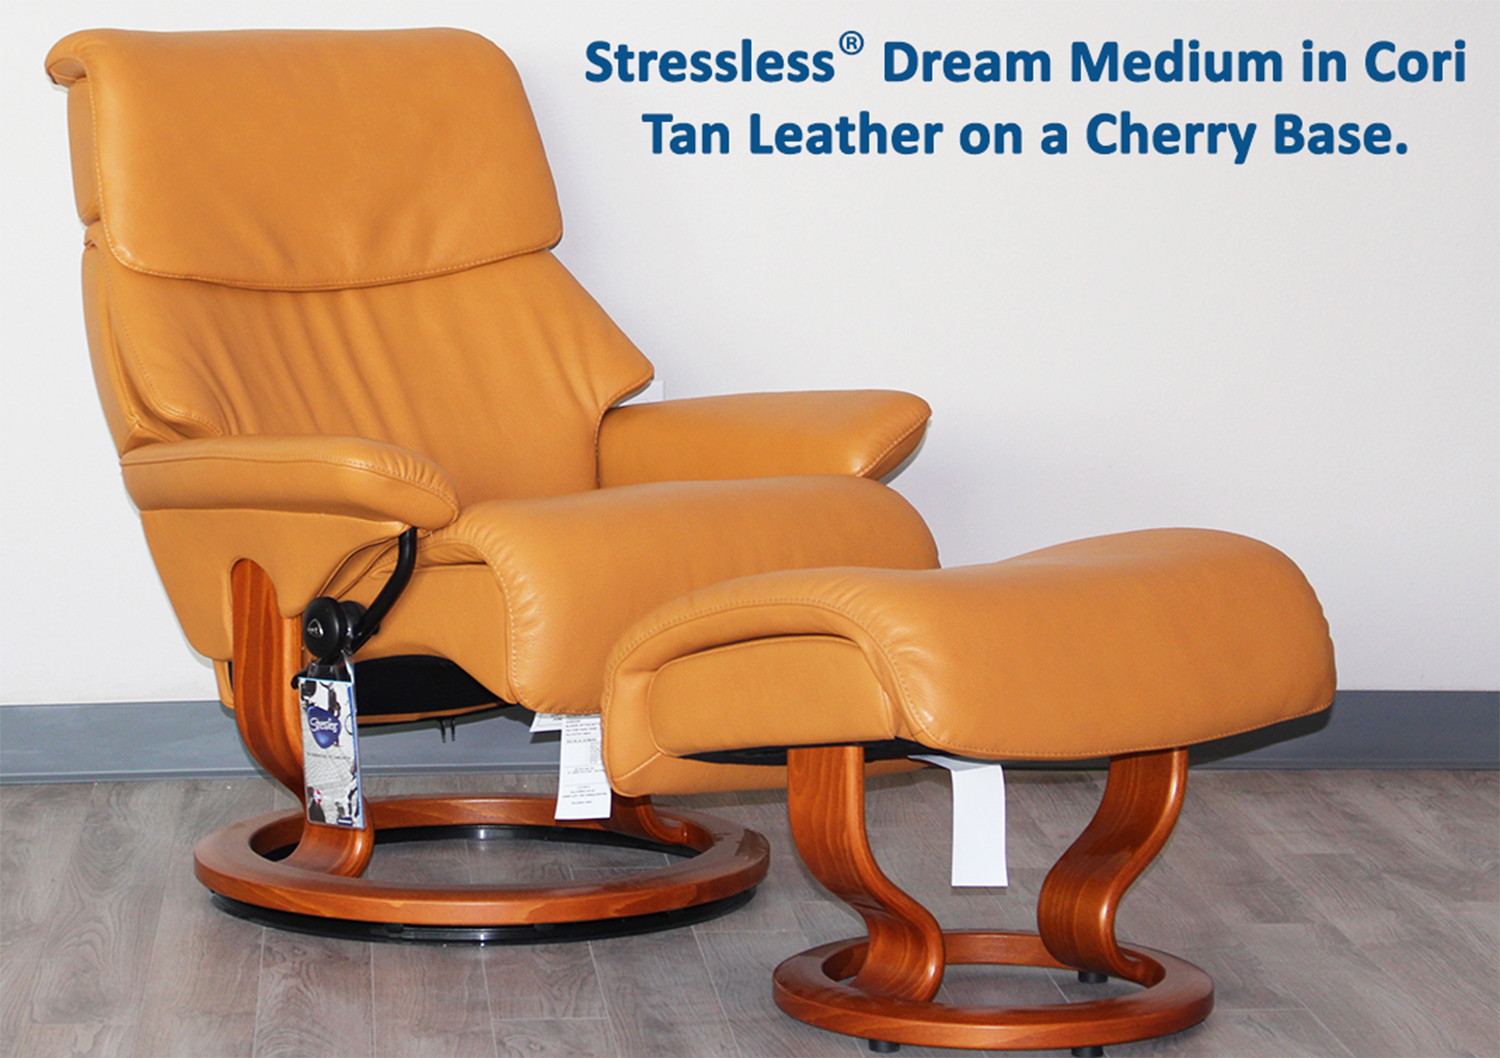 Medium by Dream Ekornes - Medium Leather Dream Tan Stressless Cori Leather Stressless Chairs Cori Recliners Tan